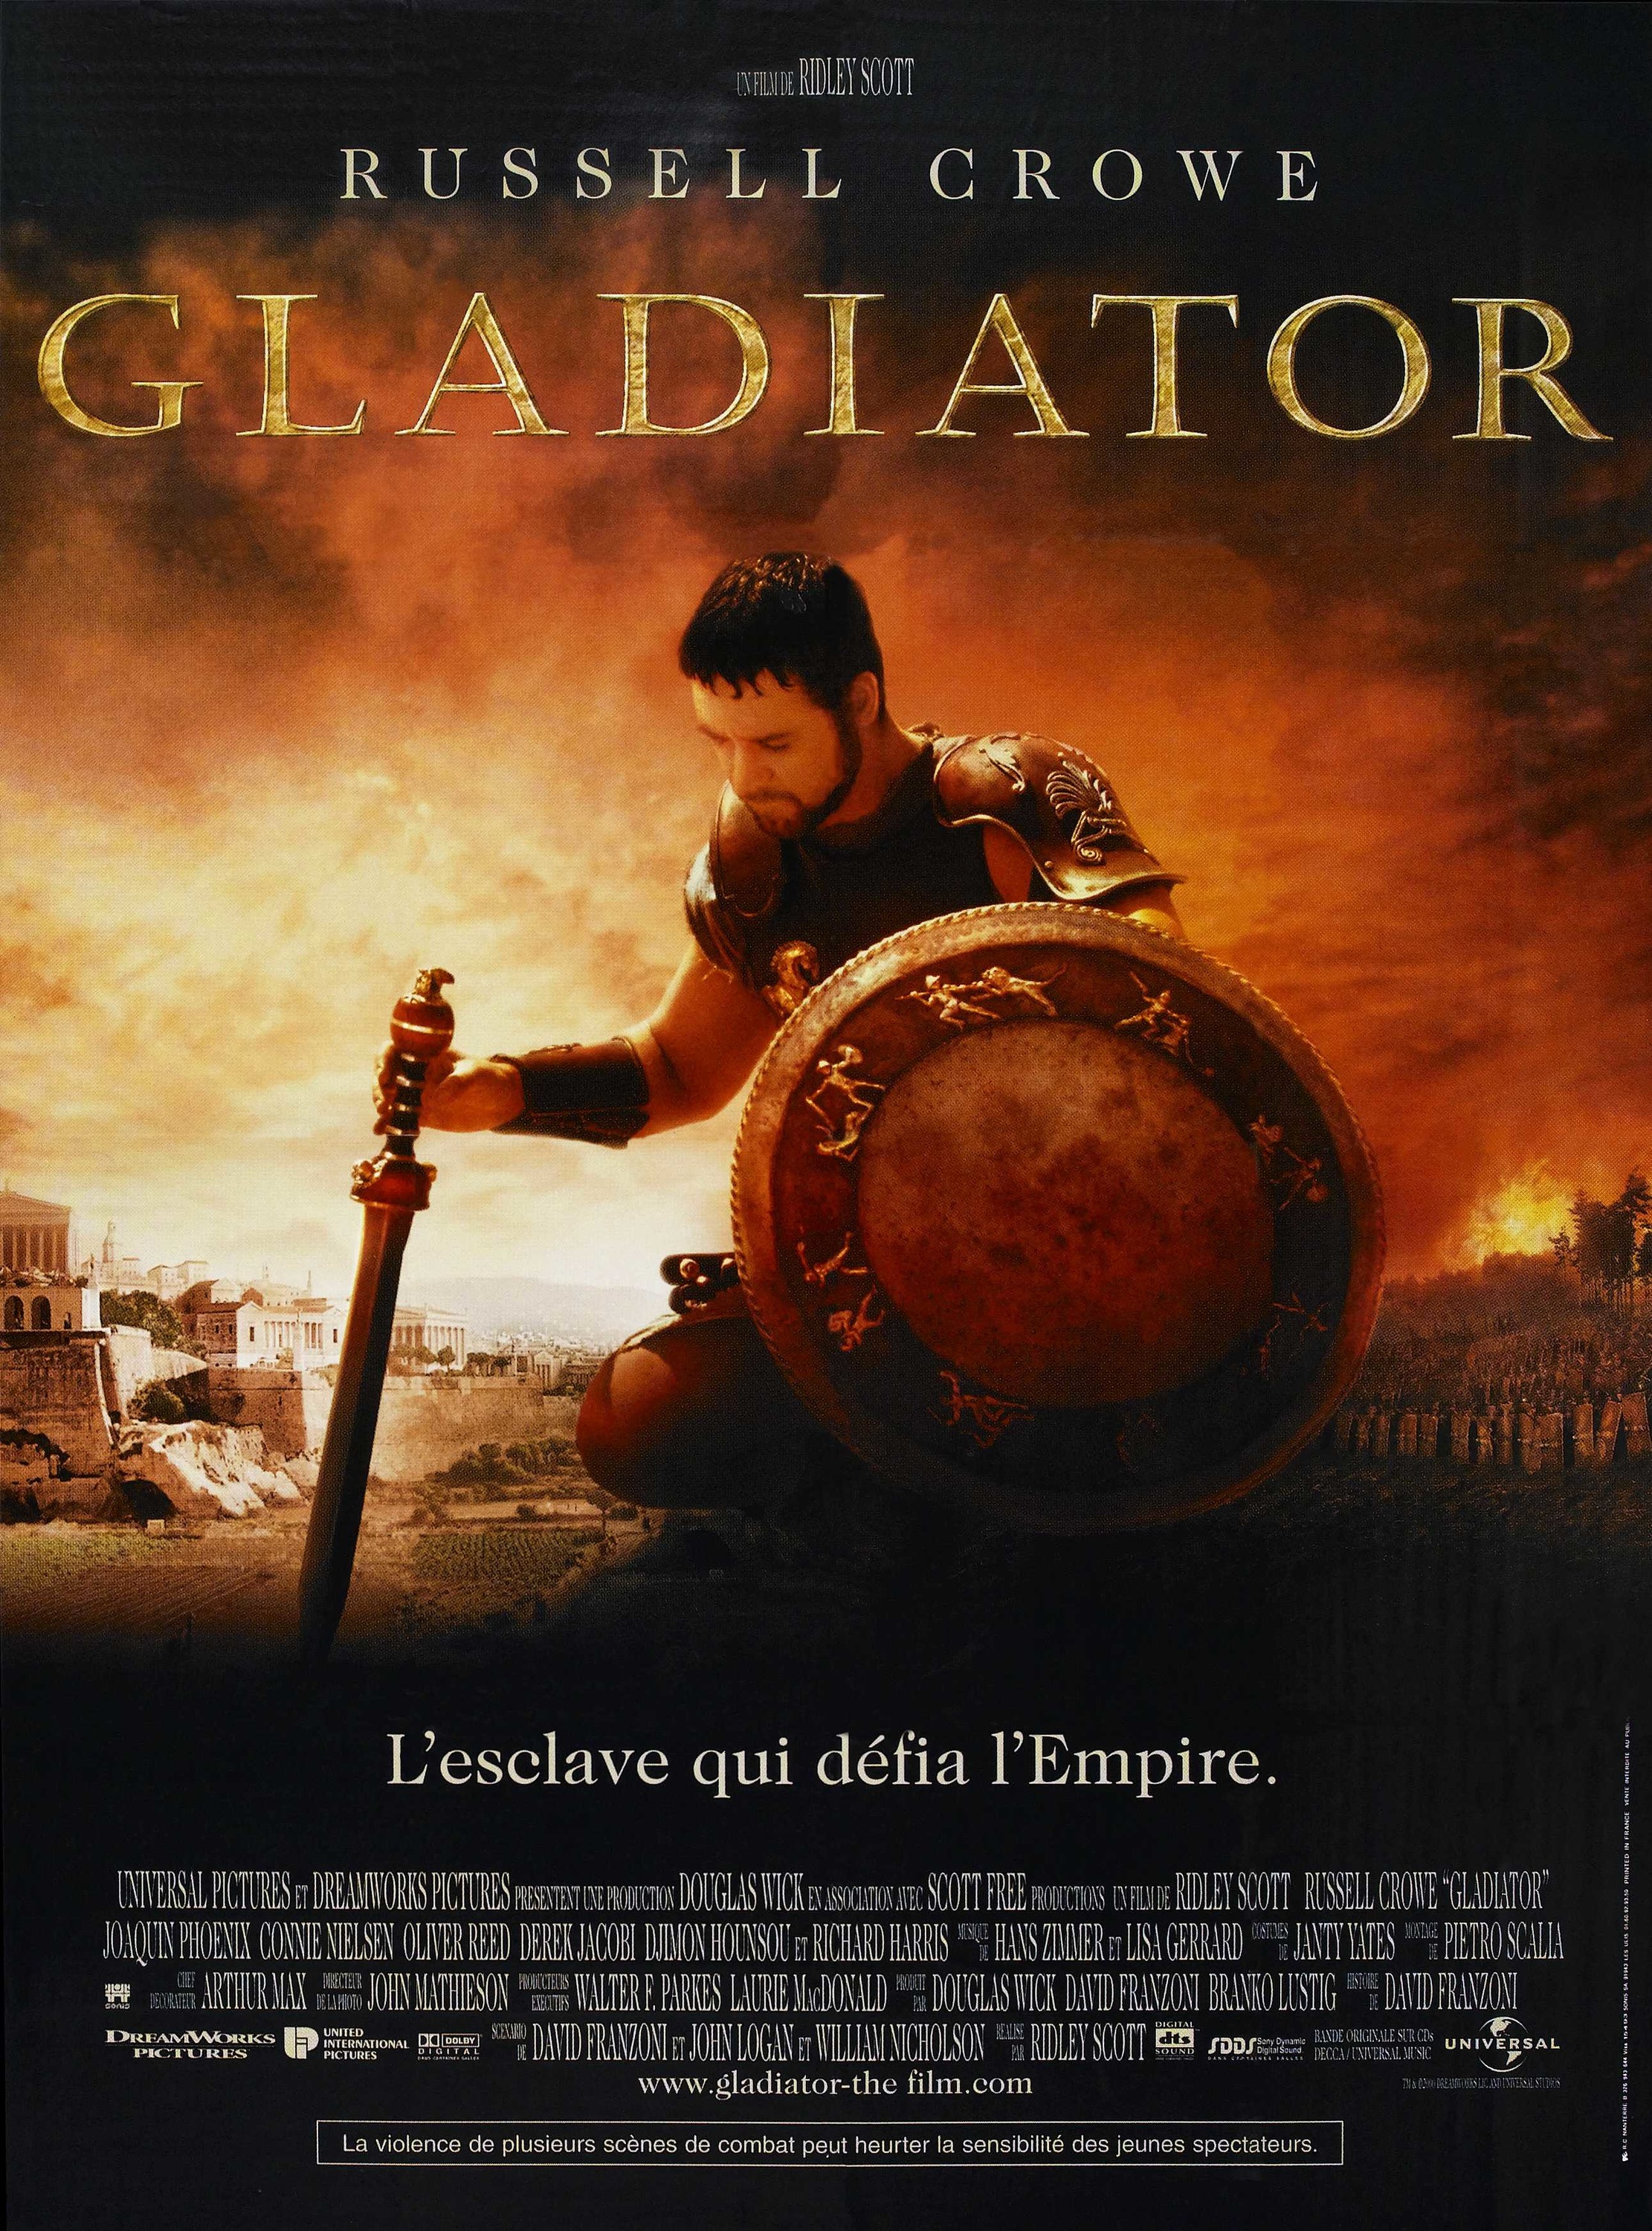 Mega Sized Movie Poster Image for Gladiator (#3 of 4)